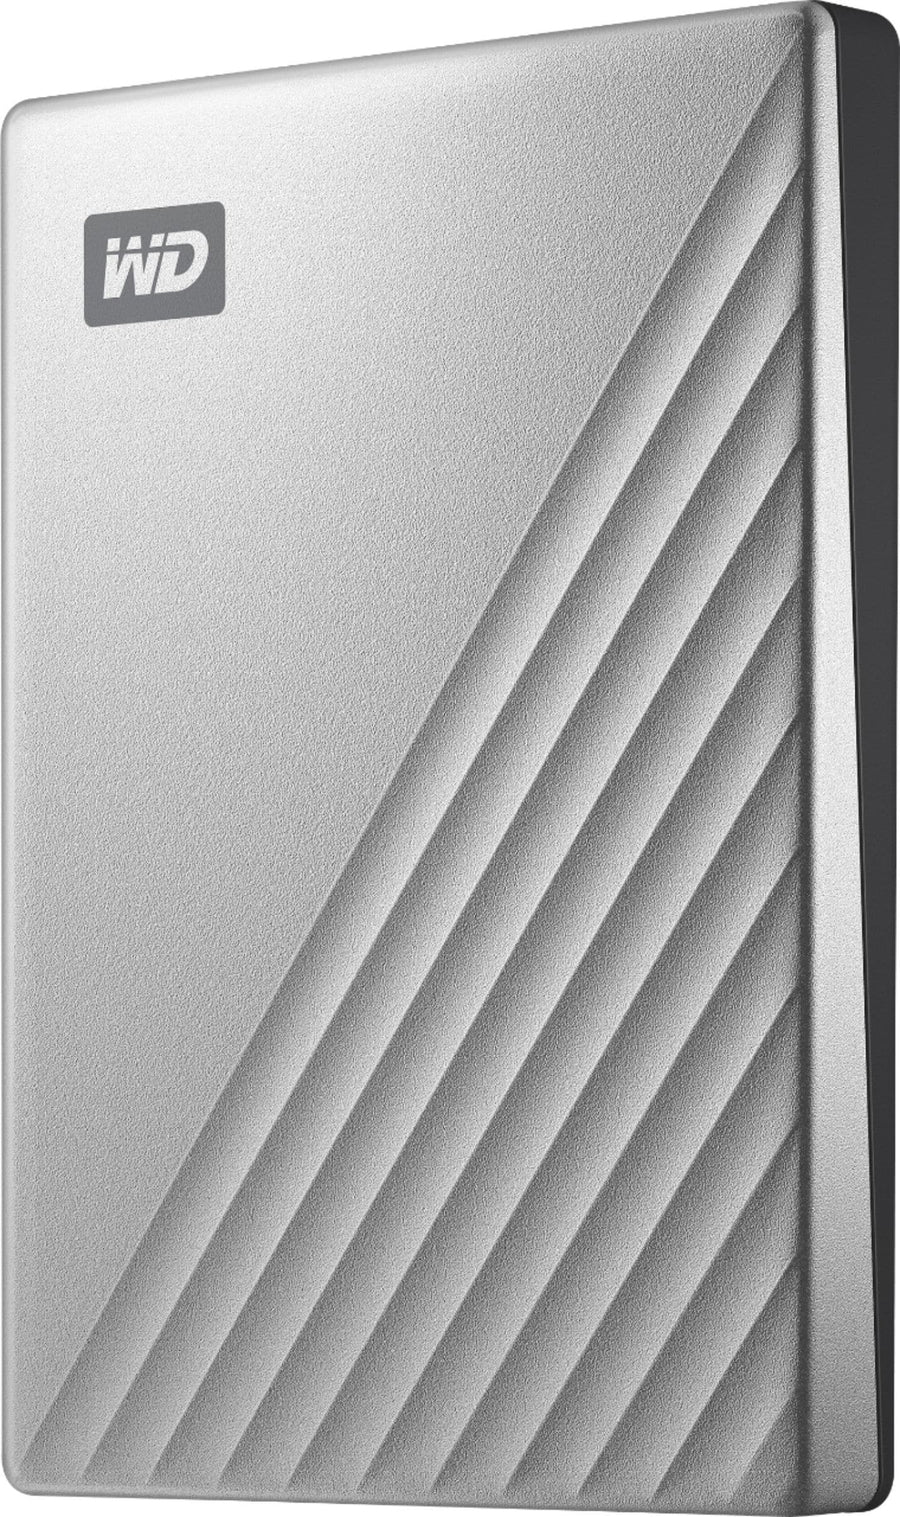 WD - My Passport Ultra for Mac 2TB External USB 3.0 Portable Hard Drive - Silver_0